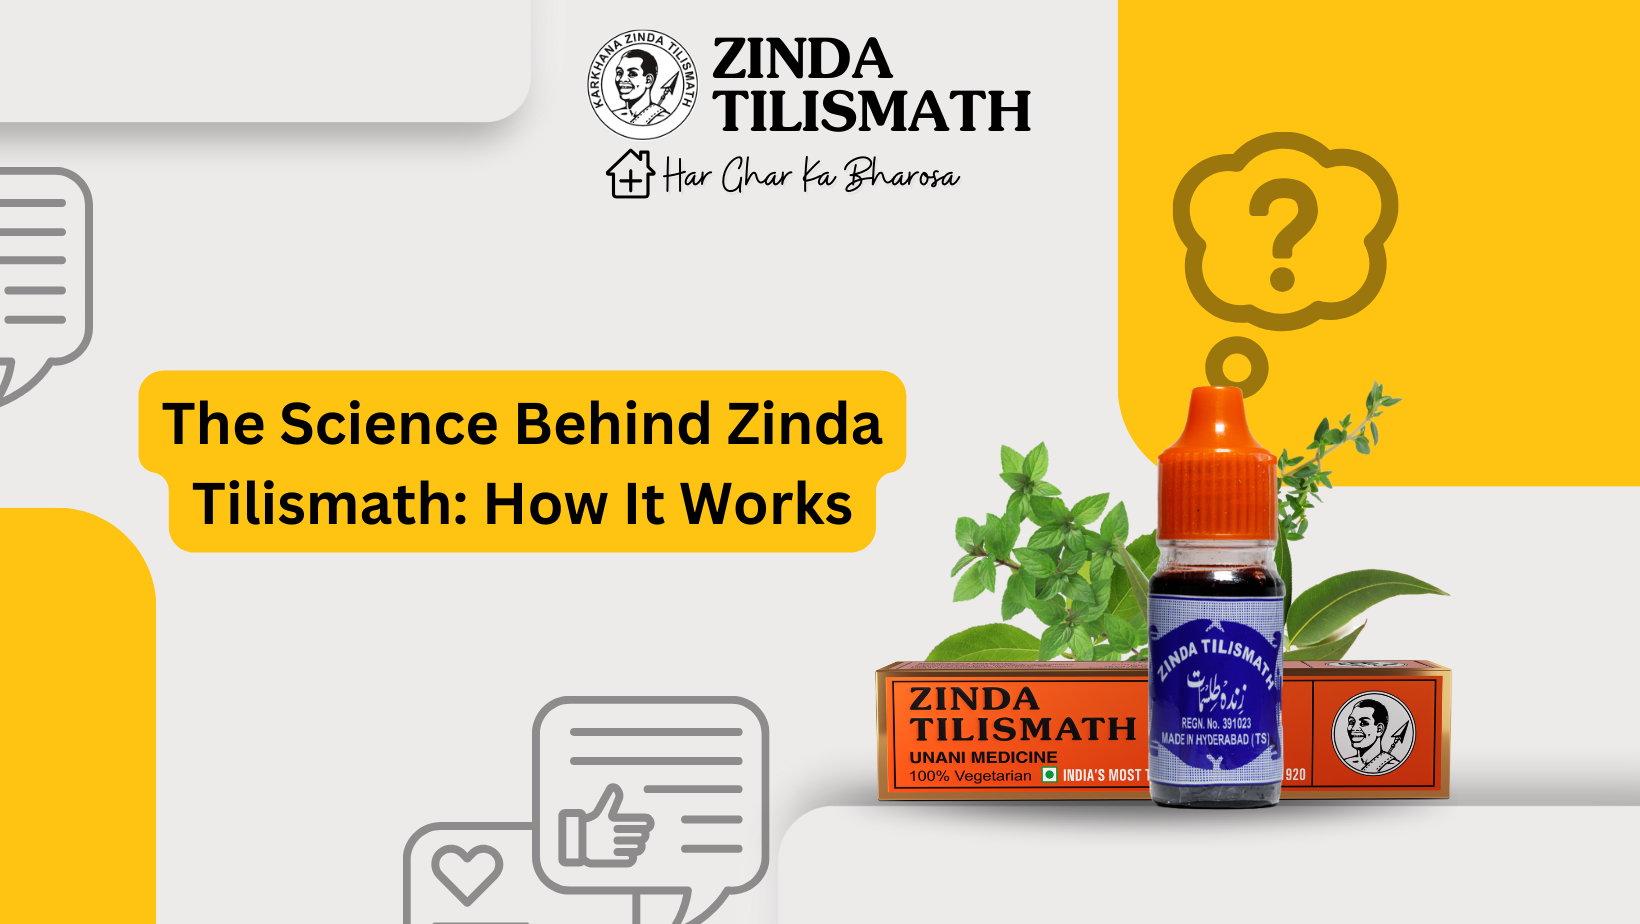 The Science Behind Zinda Tilismath: How It Works